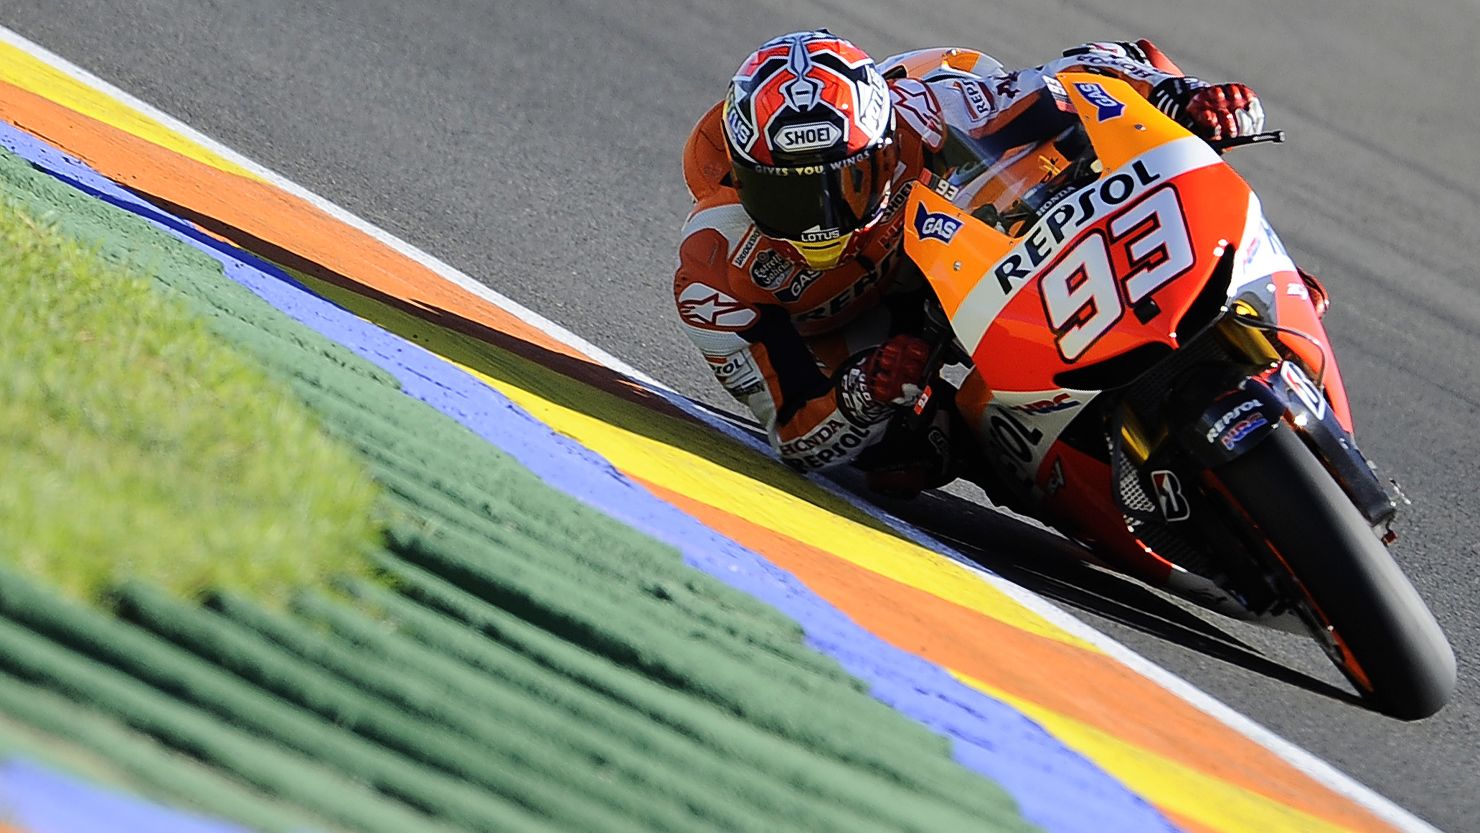 Spain's Marc Marquez is looking to cap an incredible rookie season in MotoGP. 